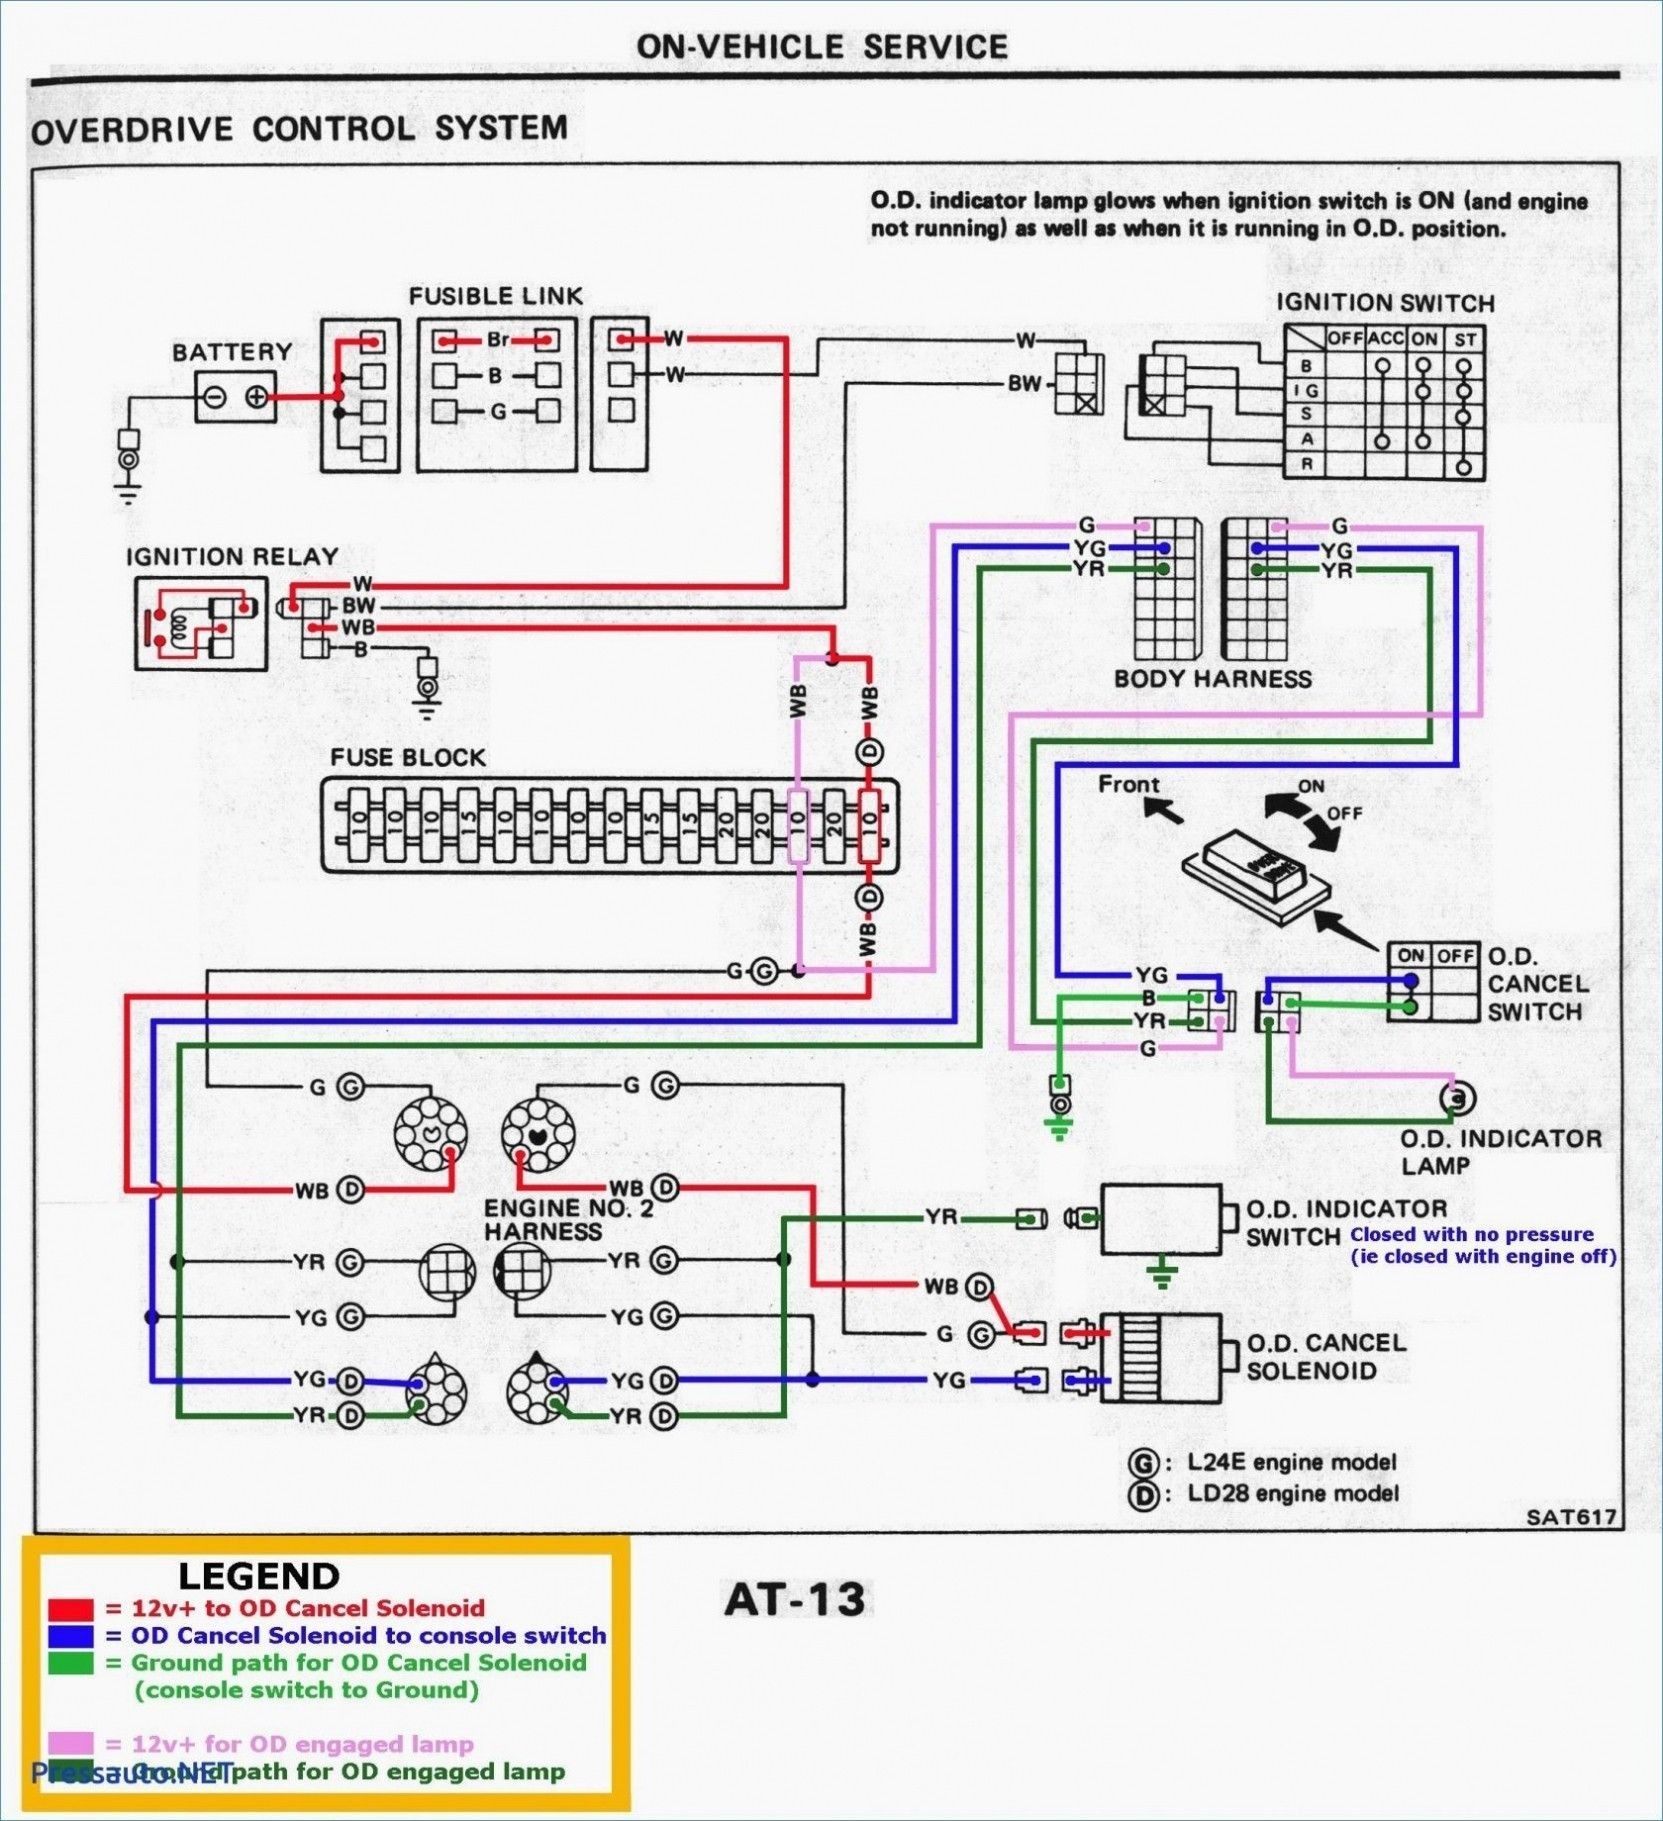 Ezgo Gas Golf Cart Wiring Diagram New Electrical Wiring Diagram toyota Avanza Of Ezgo Gas Golf Cart Wiring Diagram